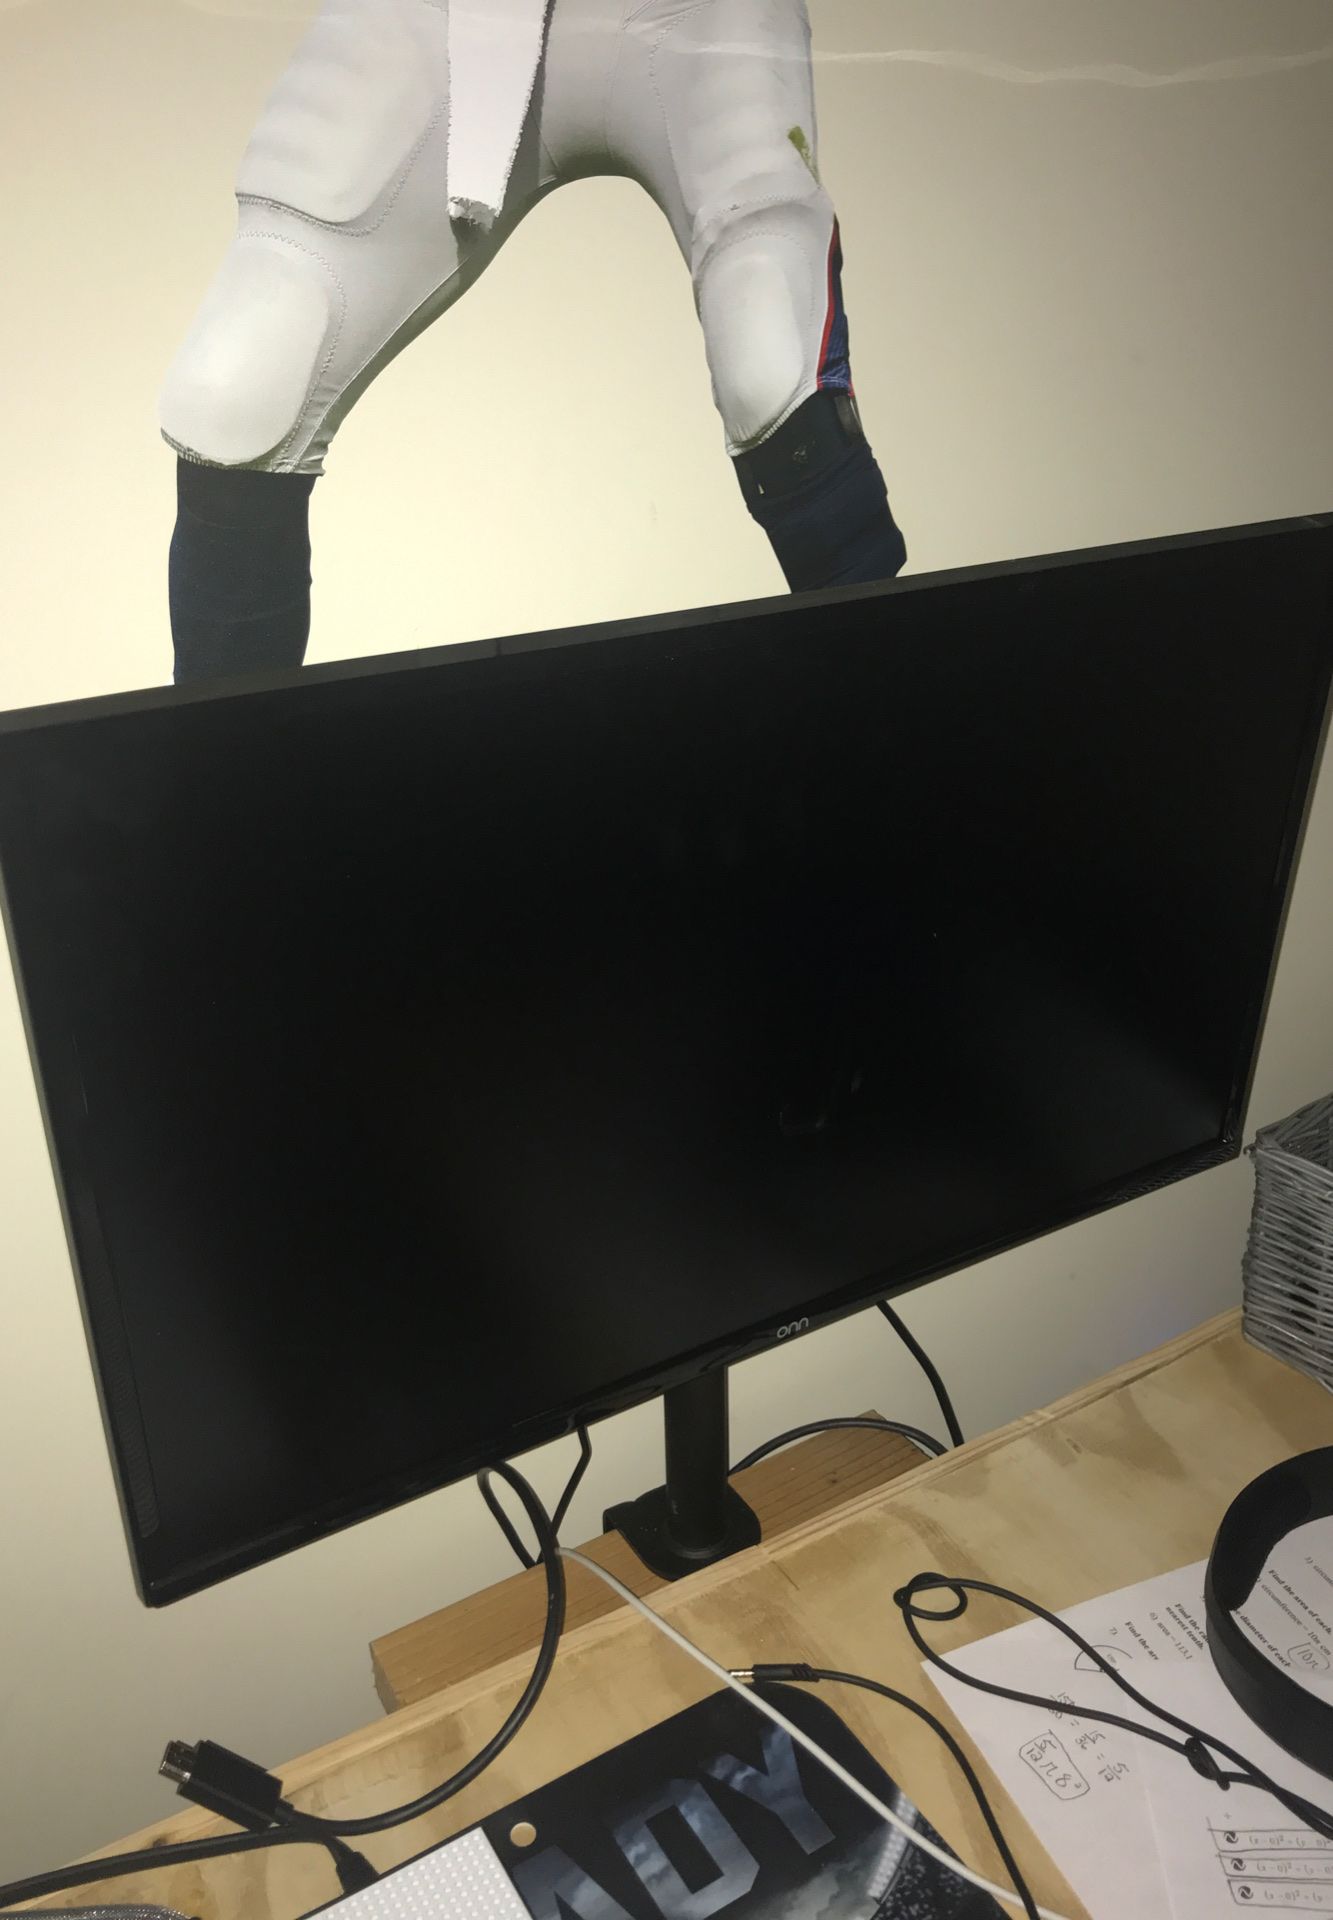 24 inch monitor